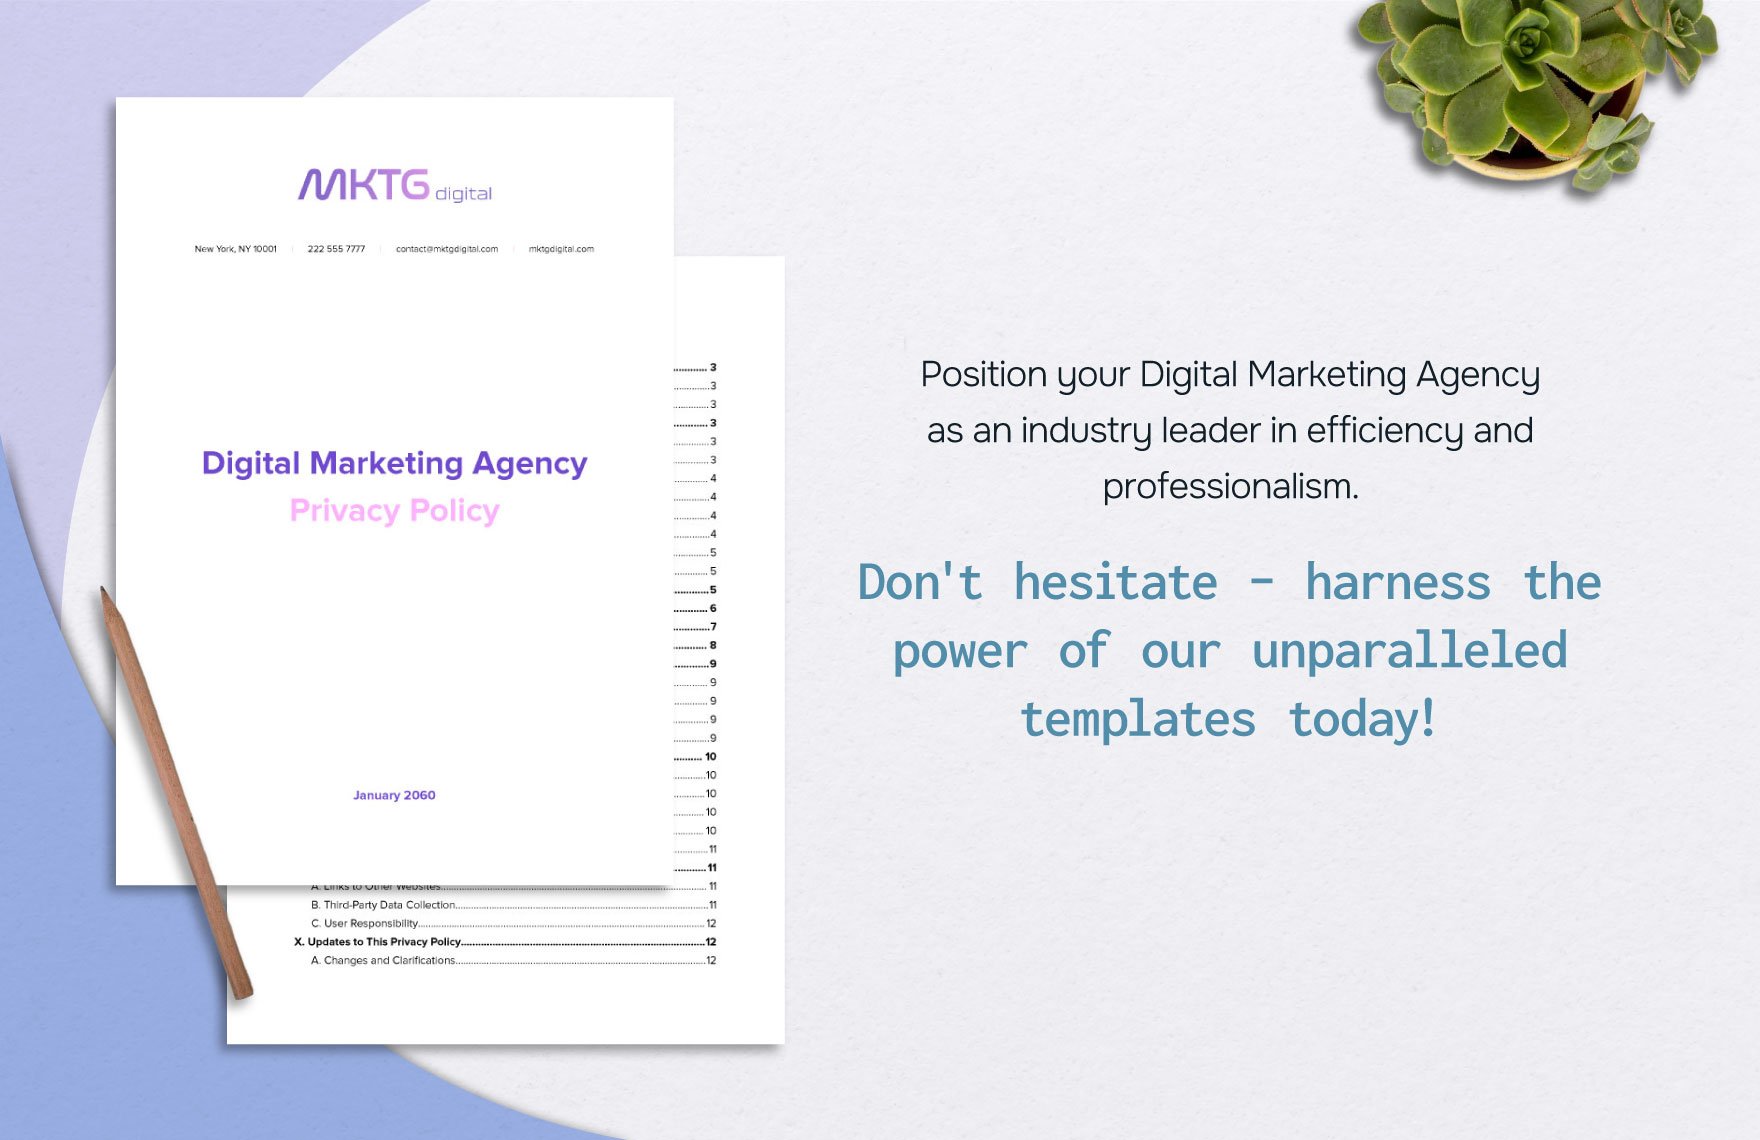 Digital Marketing Agency Privacy Policy Template